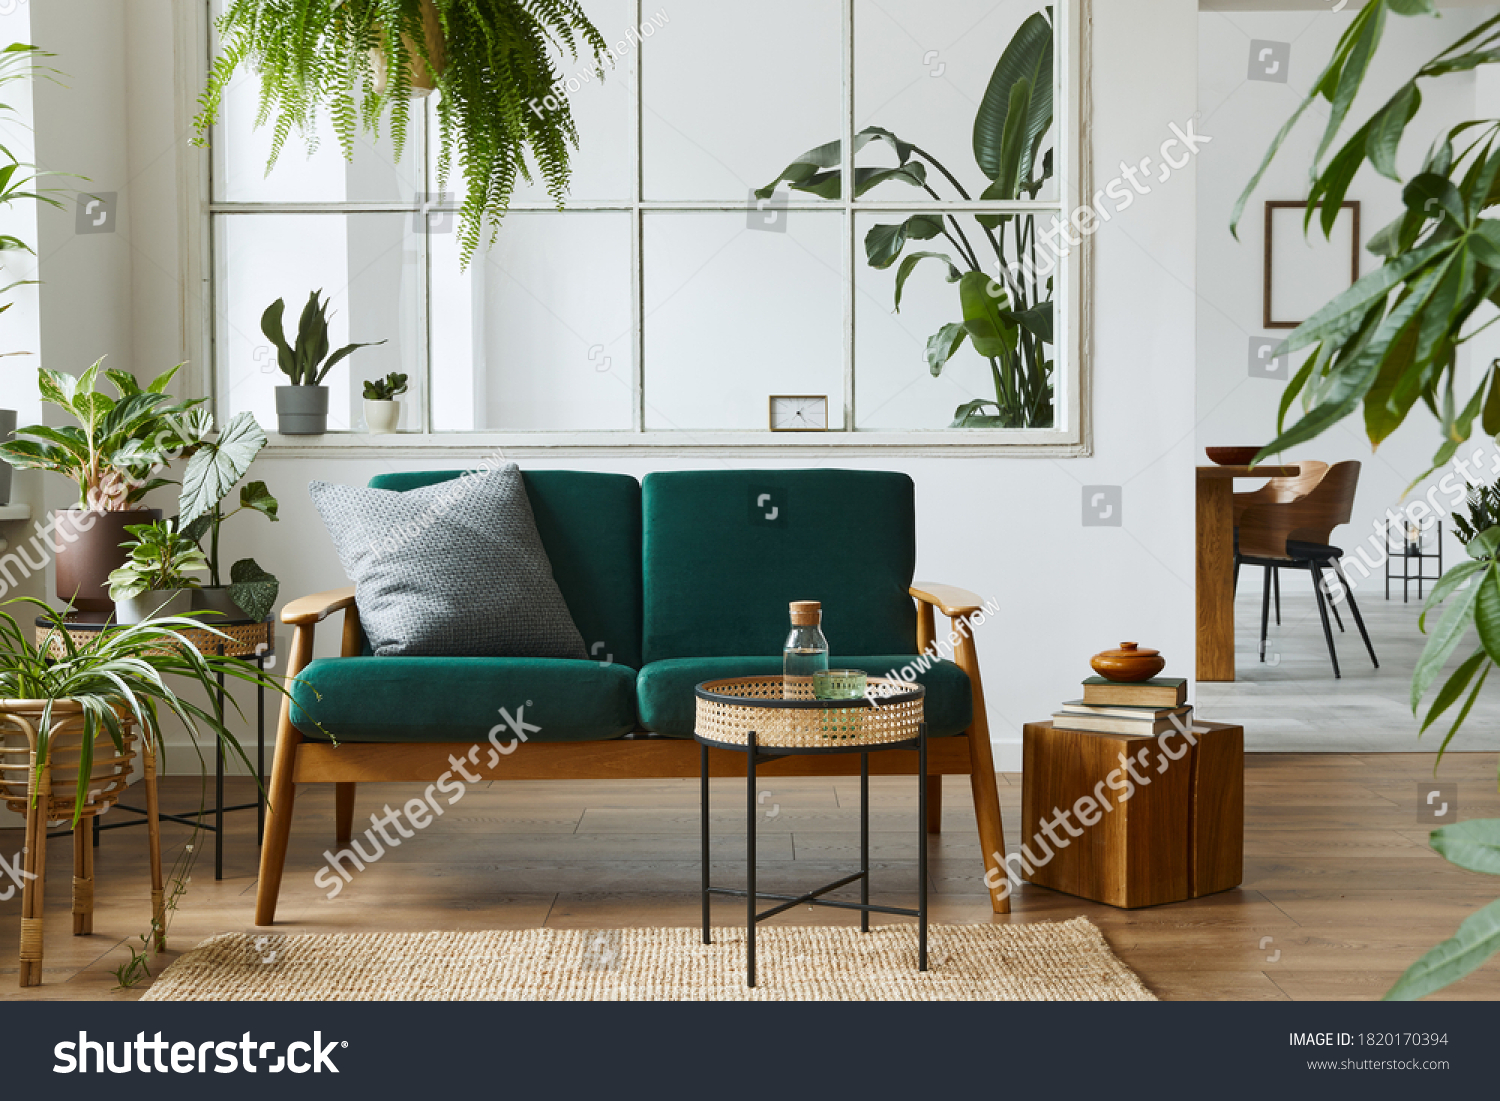 Stylish scandinavian living room interior with green velvet sofa, coffee table, carpet, plants, furniture, elegant accessories in modern home decor. Template. #1820170394